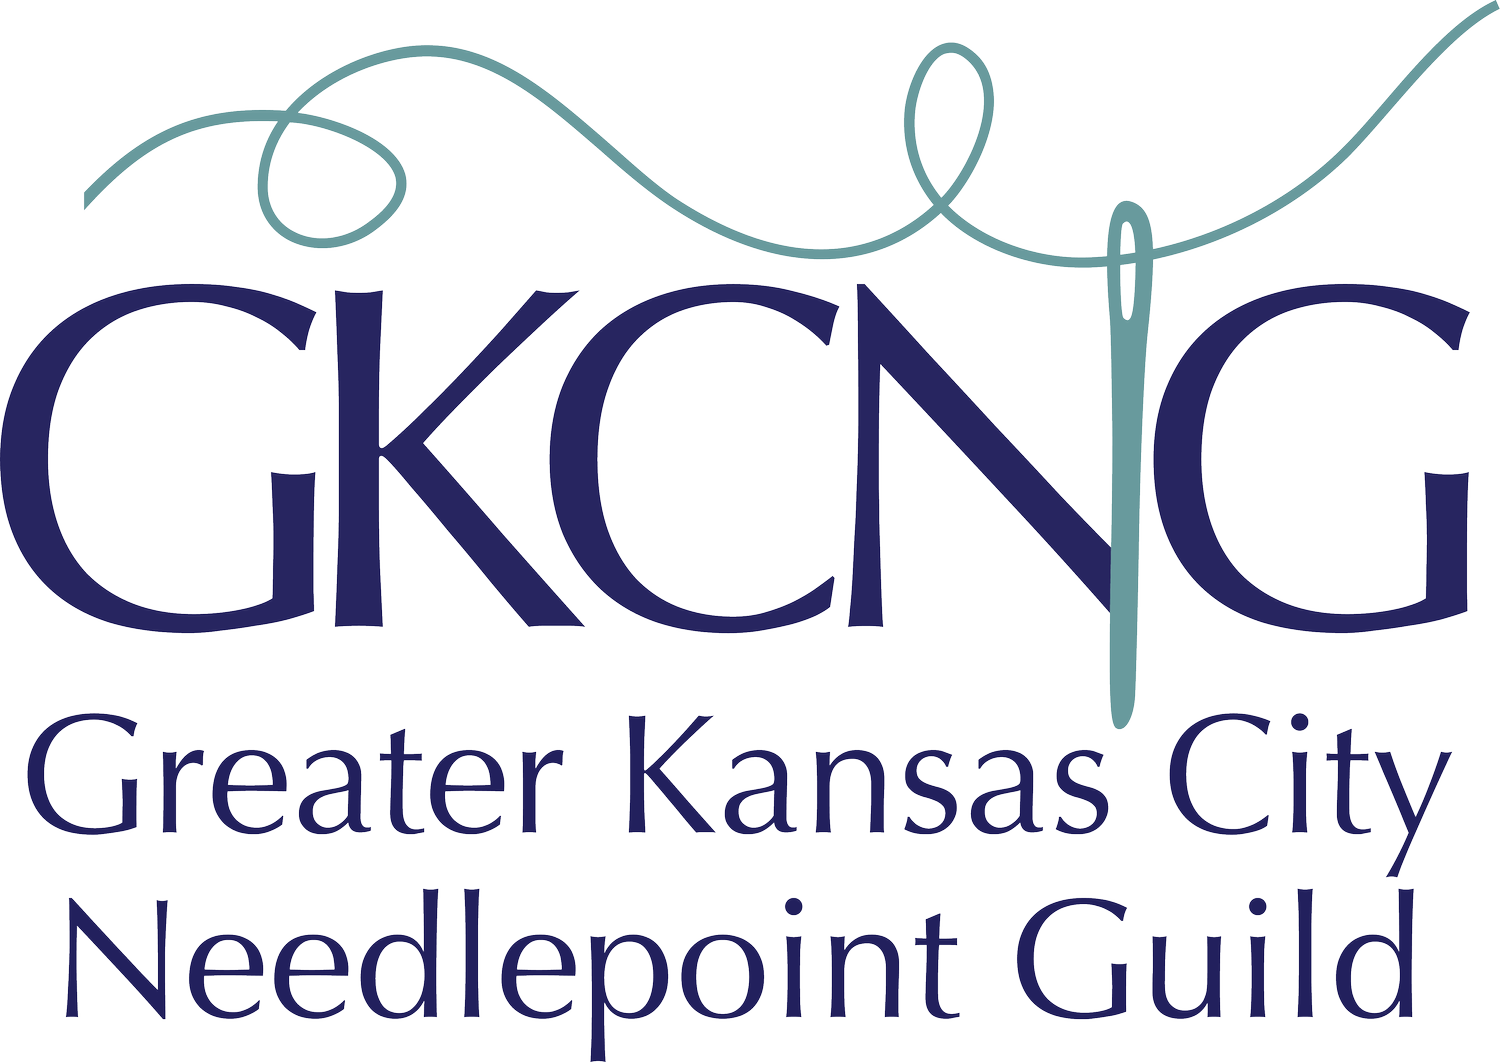 Greater Kansas City Needlepoint Guild